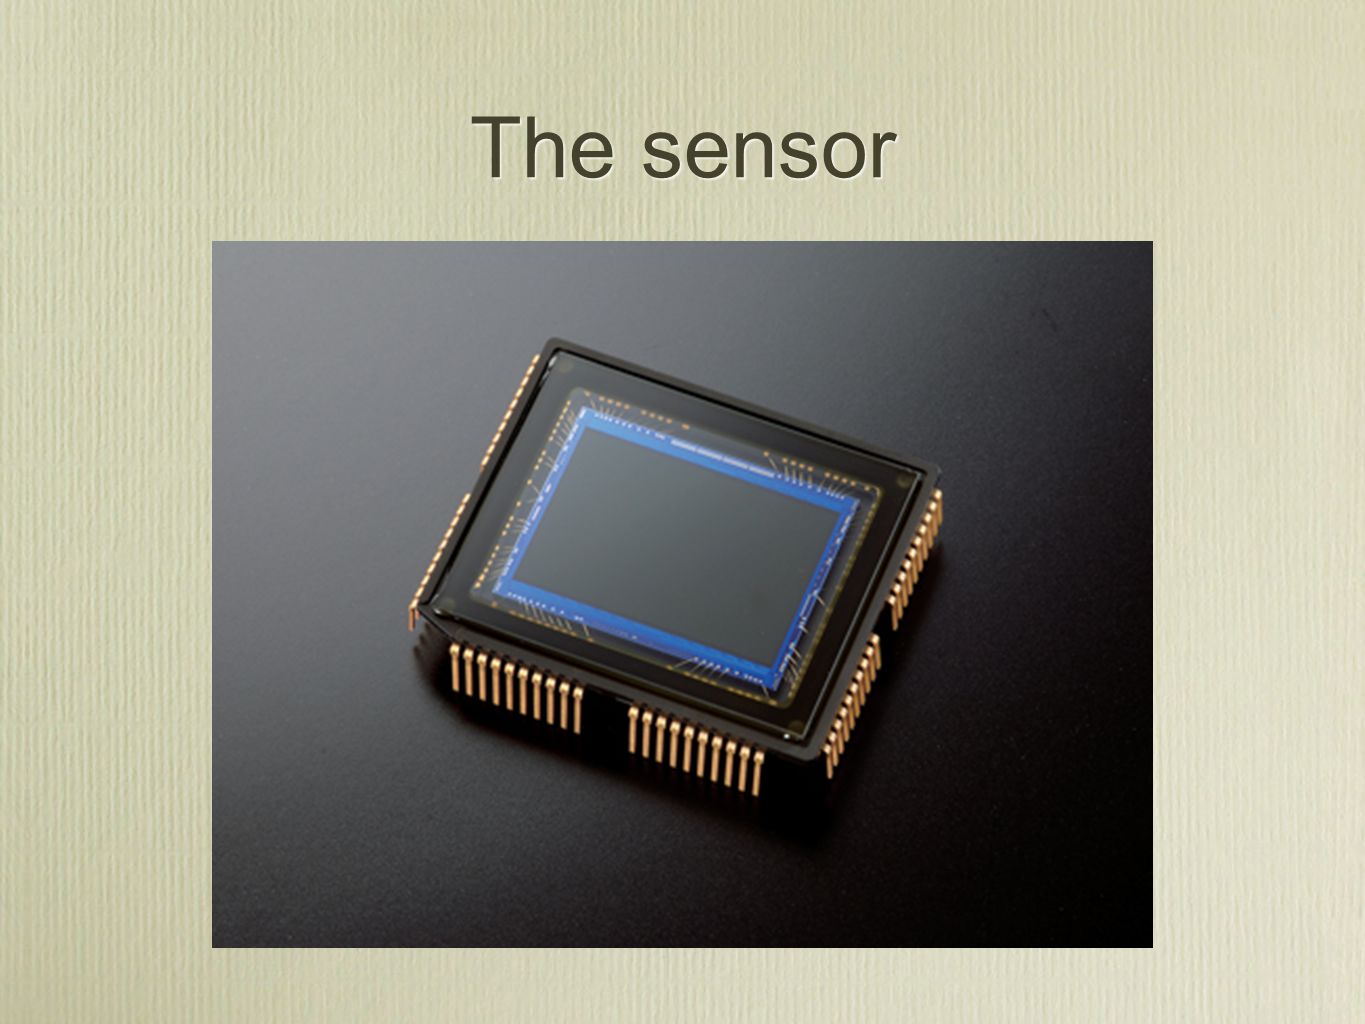 The sensor